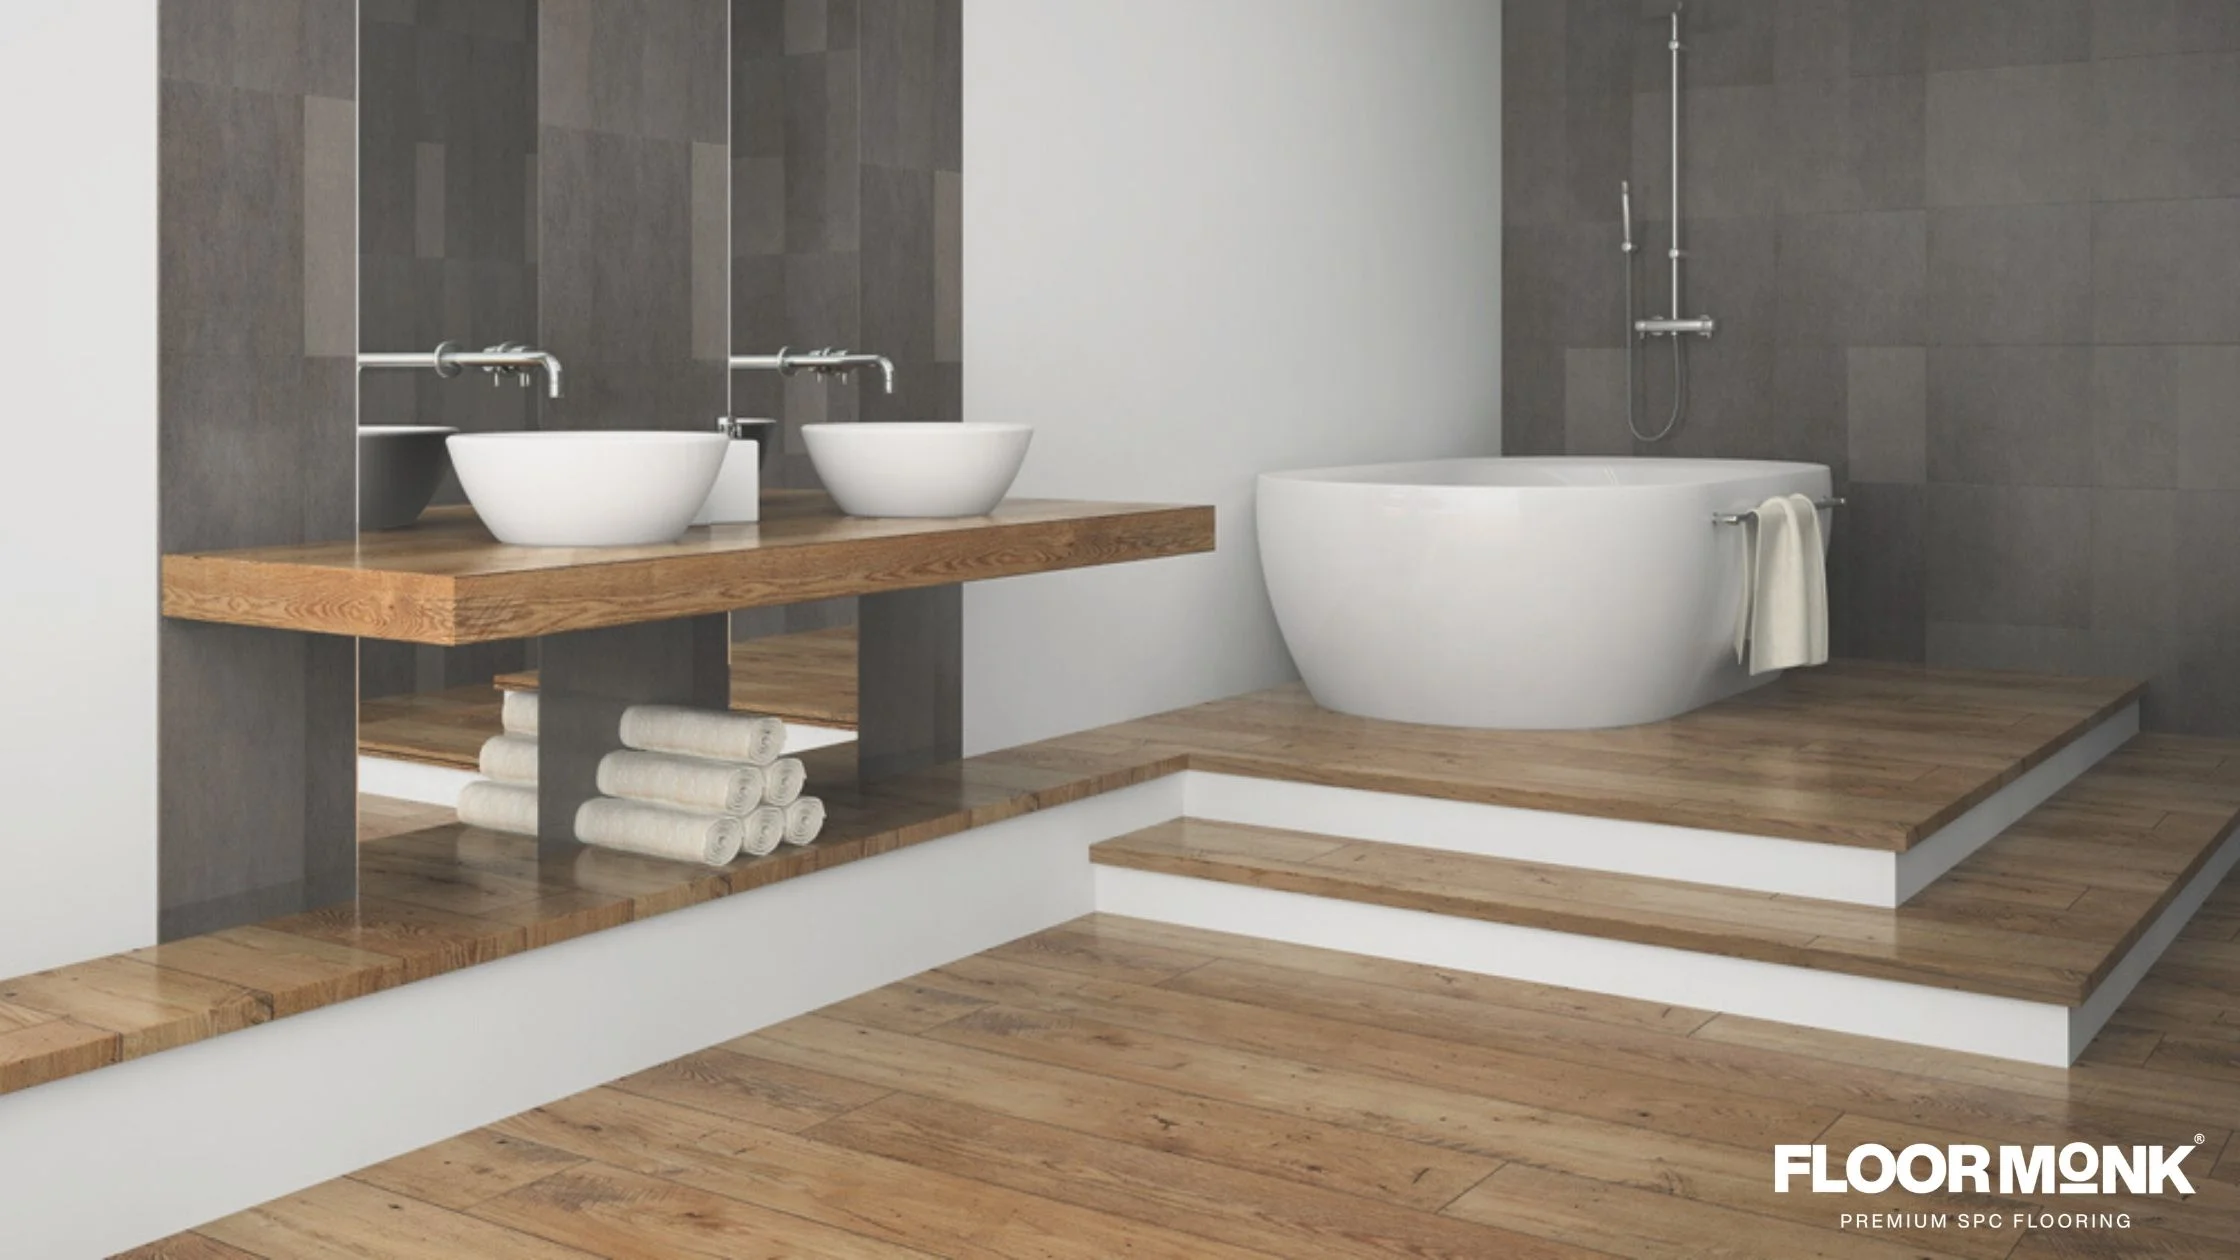 How can Bathroom Wood Flooring be sealed?